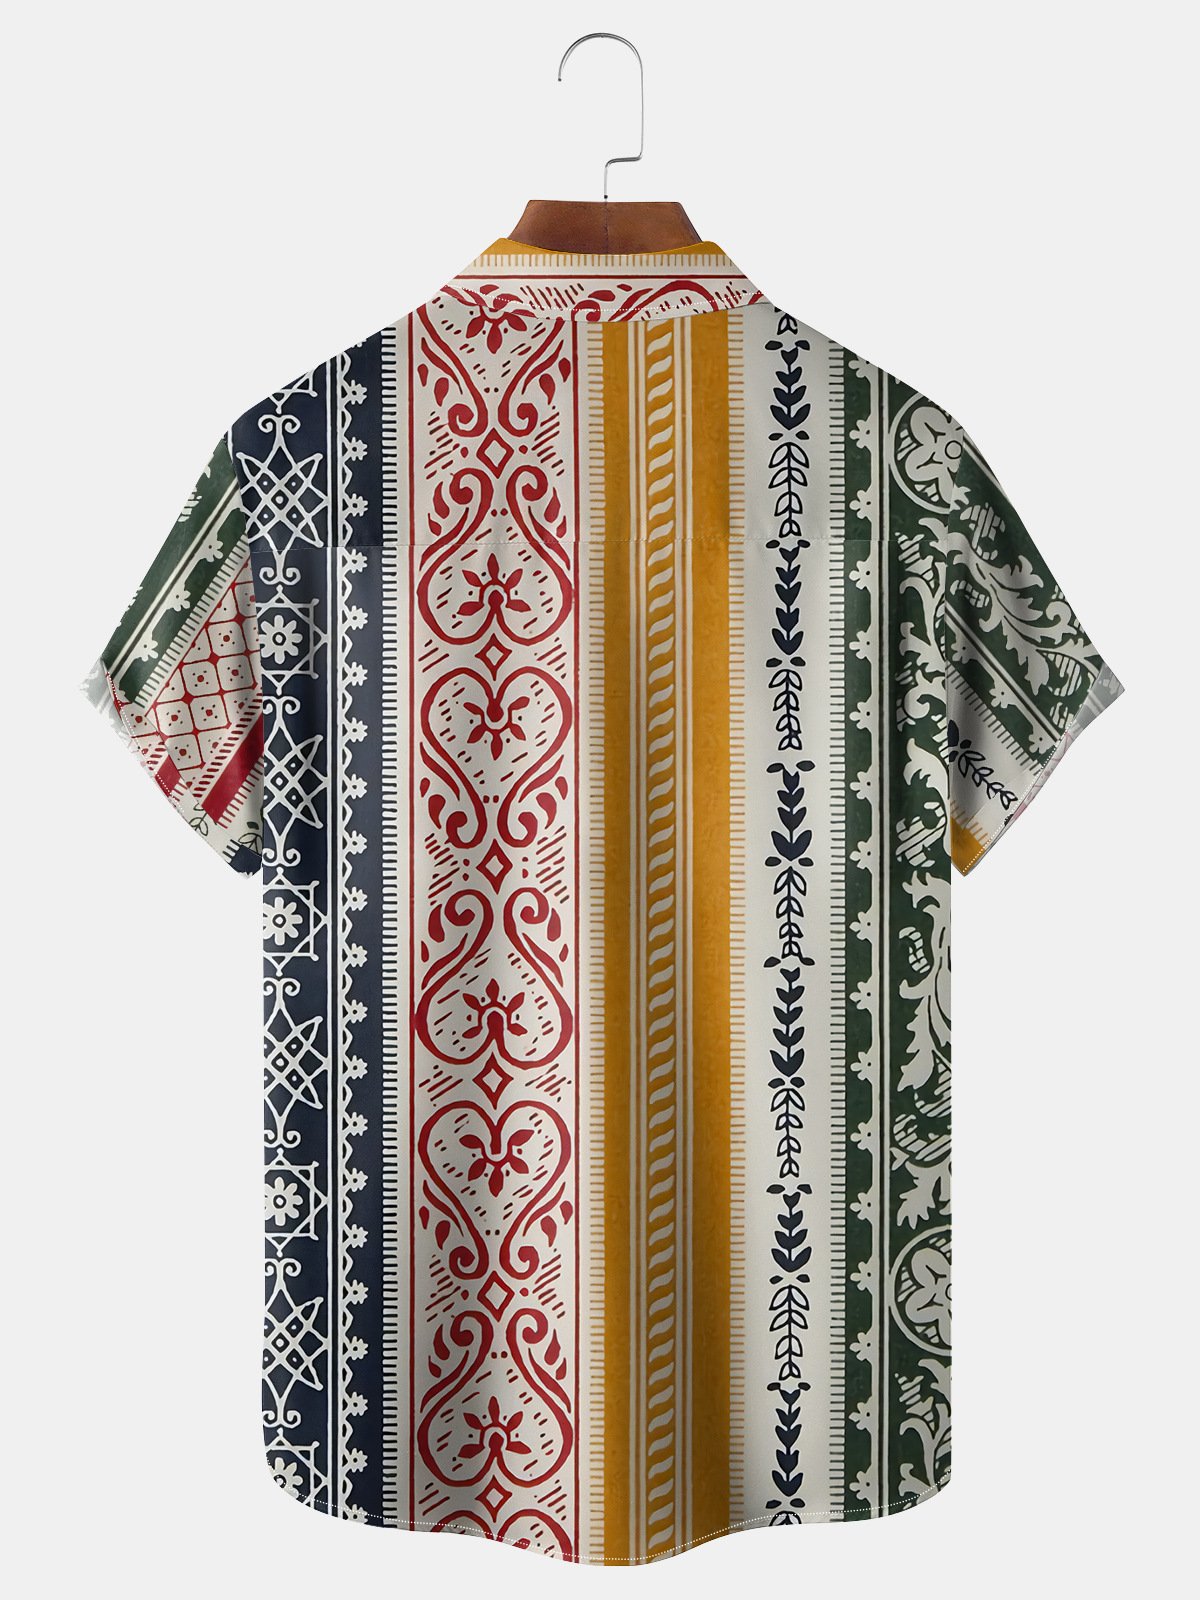 Ethnic Chest Pocket Short Sleeve Casual Shirt